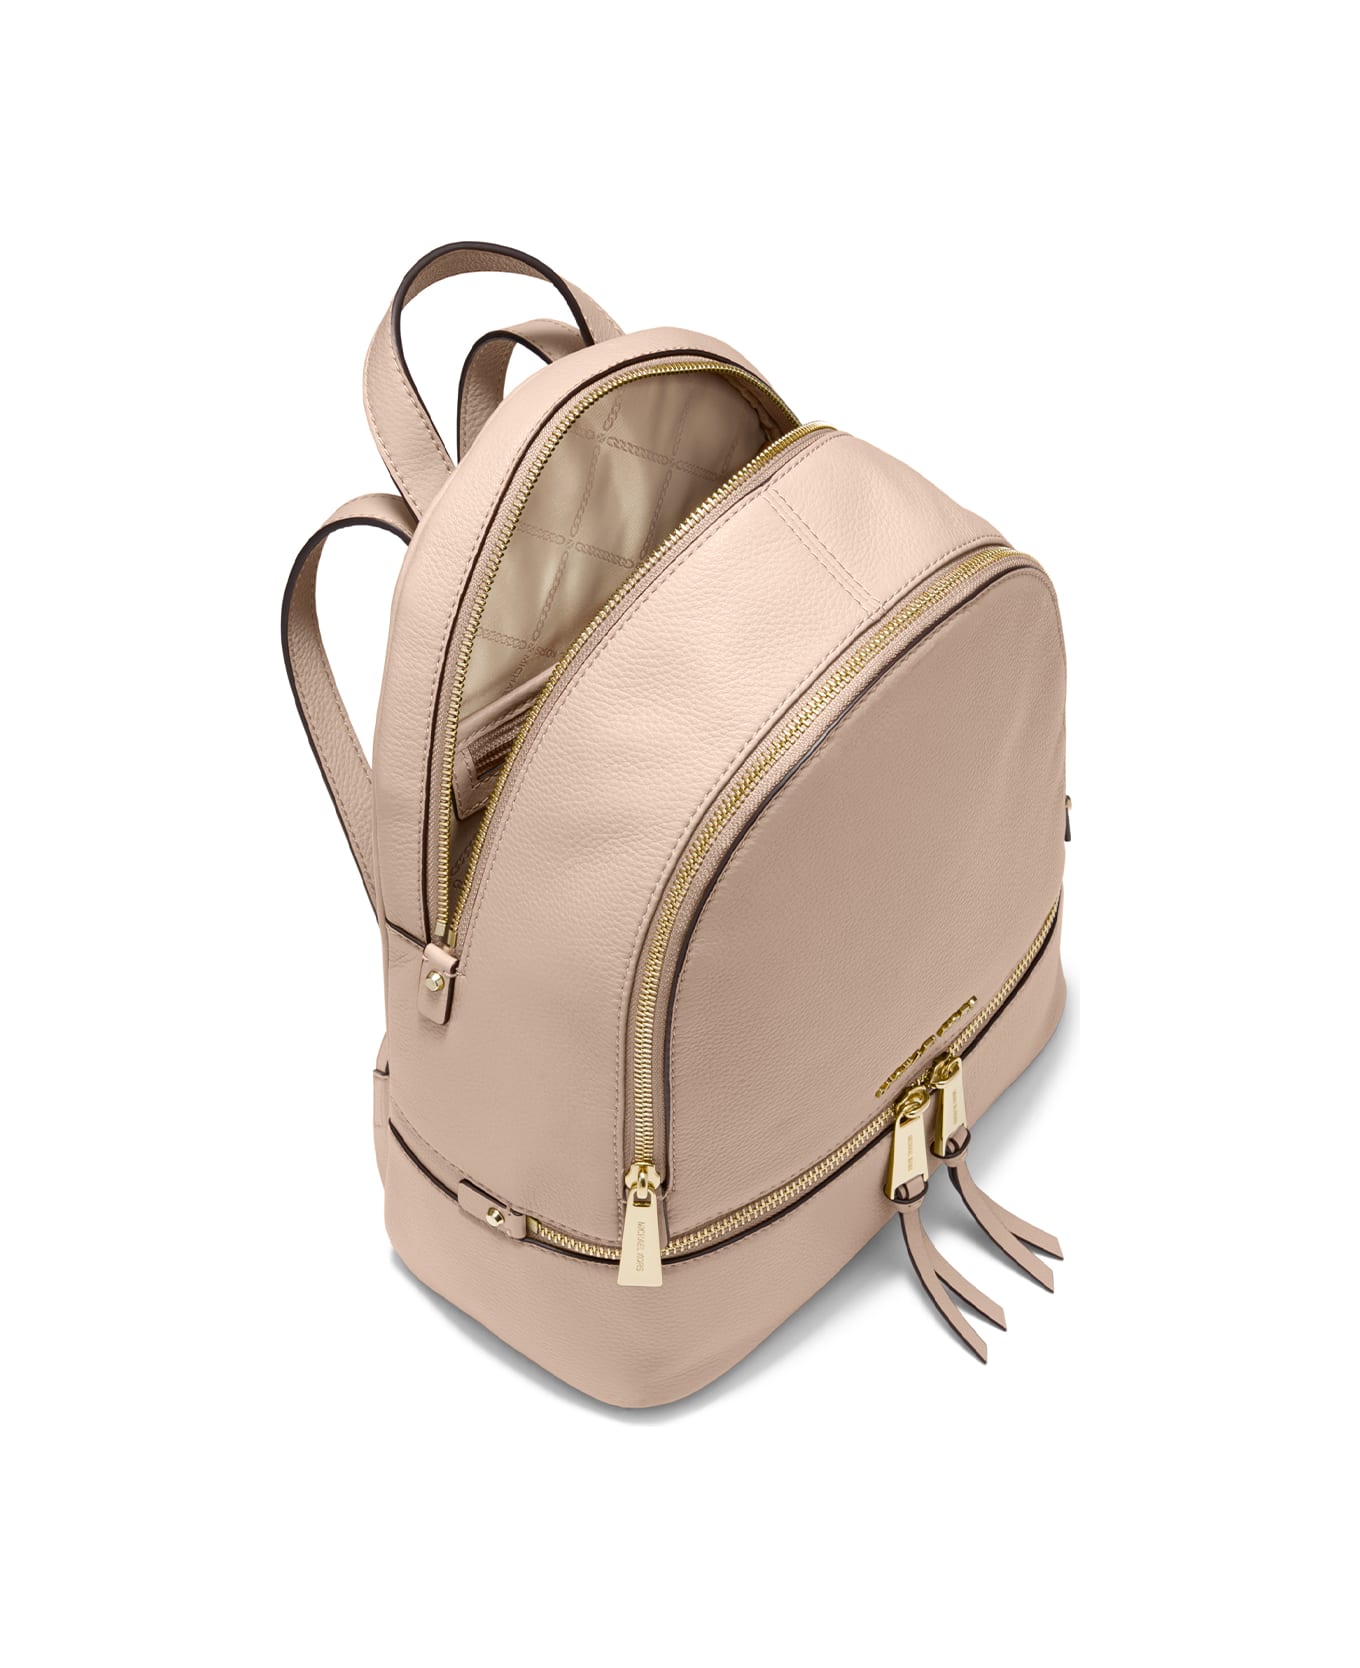 Michael Kors Rhea Medium Leather Backpack - SOFT PINK